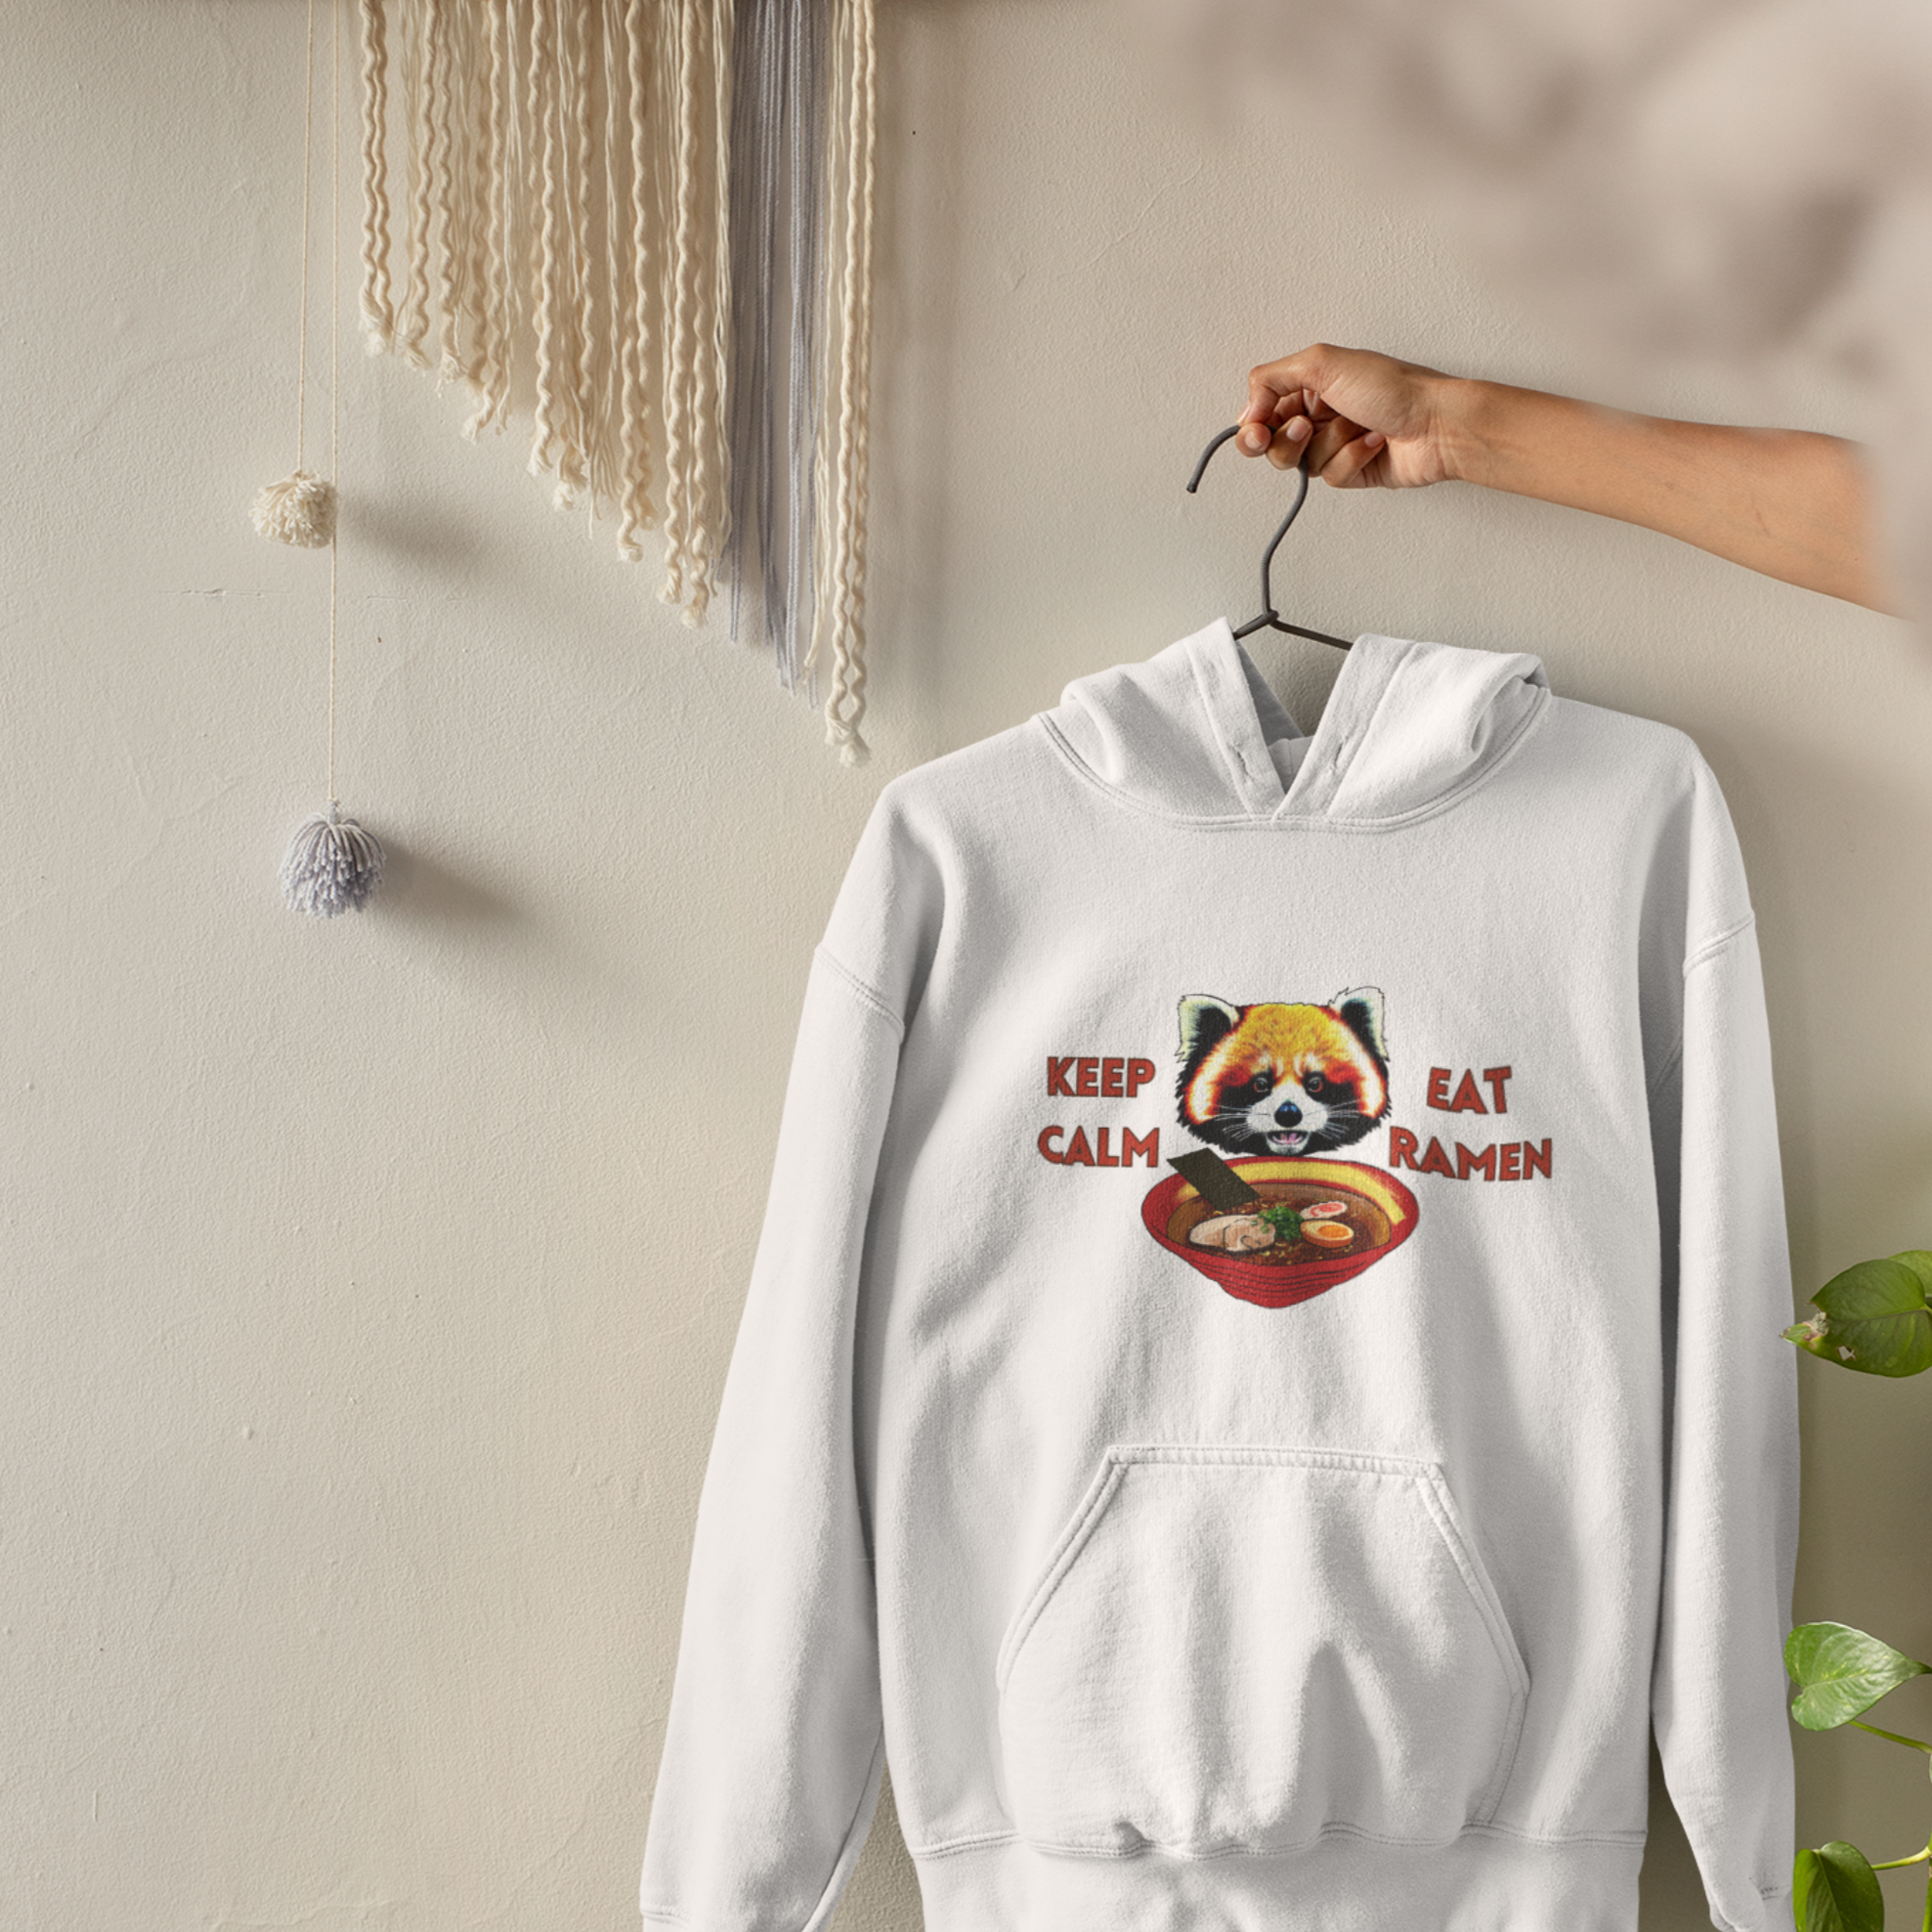 Ramen Hoodie: Keep Calm and Eat Ramen with Red Panda - Asian Foodie Sweatshirt for Ramen Lovers and Foodies